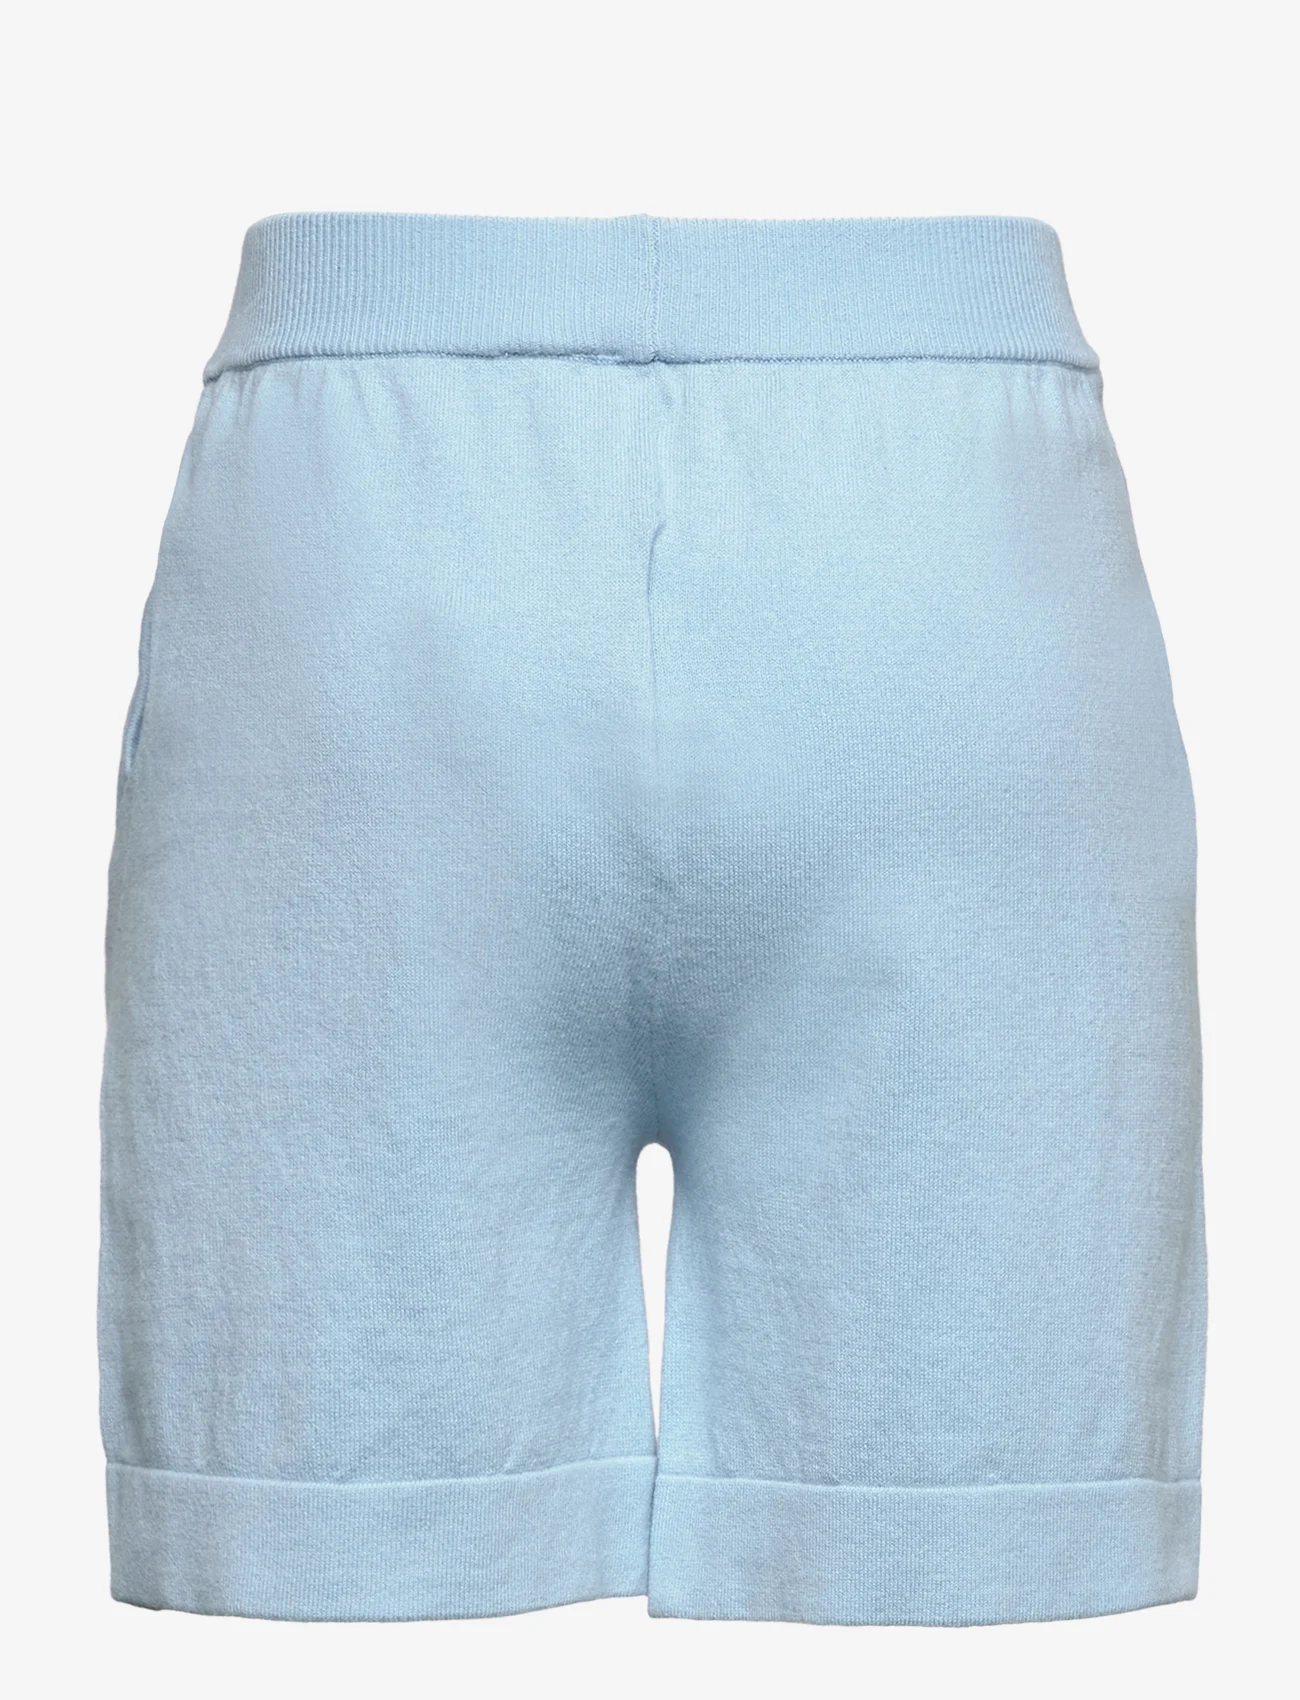 FUB - Shorts - sweatshorts - glacier - 1